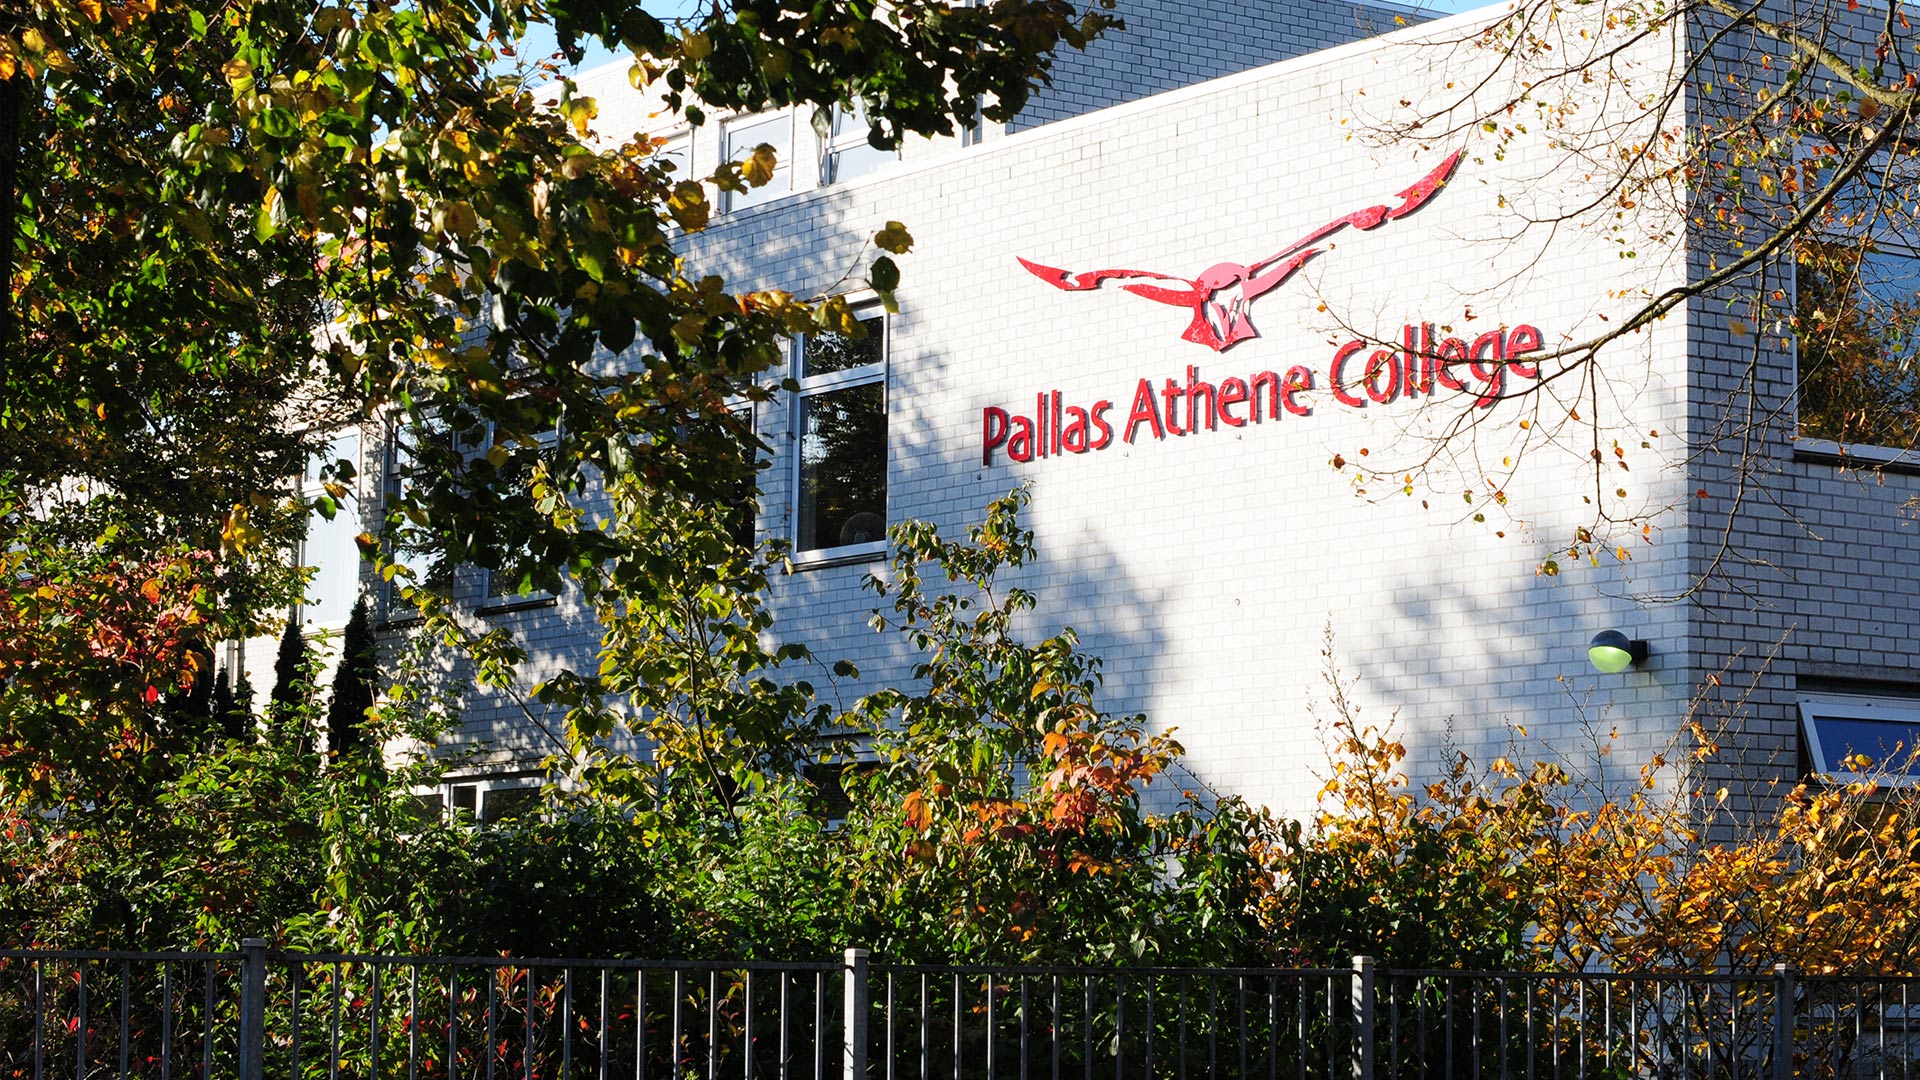 Pallas Athene College